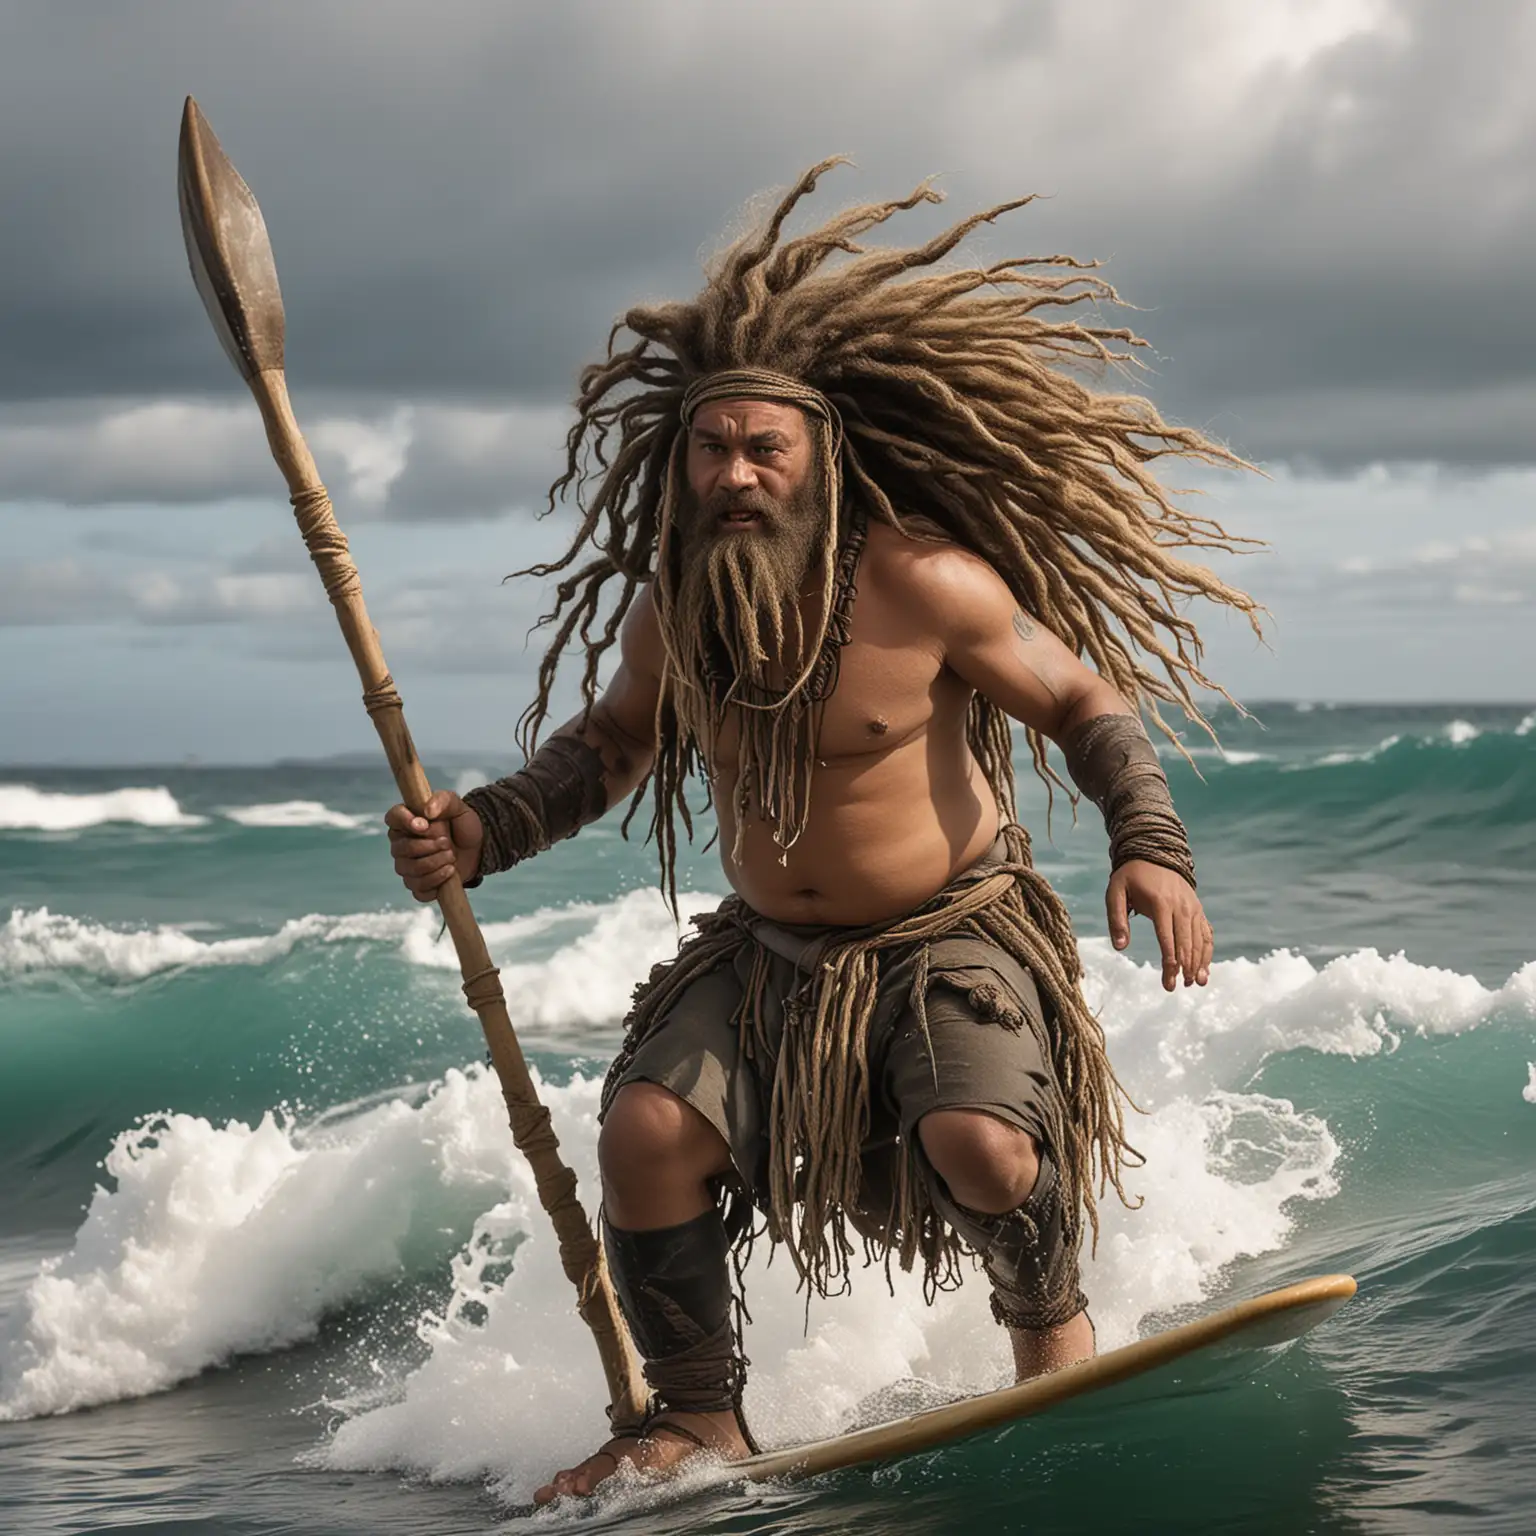 Dreadlocked Islander Dwarf Surfing with Spear